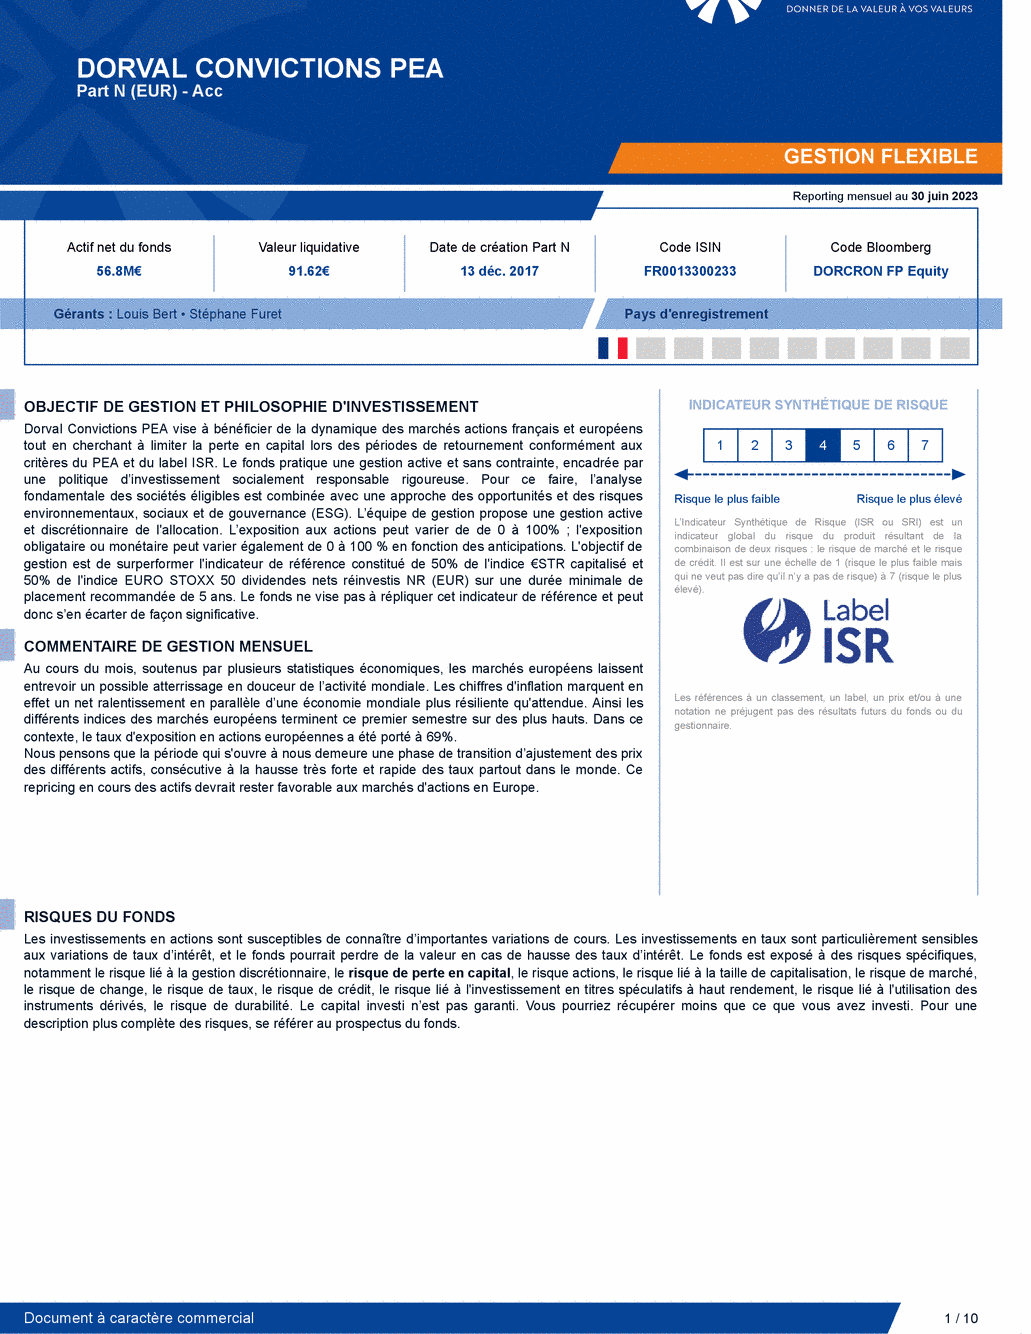 Reporting DORVAL CONVICTIONS PEA Part N - 30/06/2023 - Français